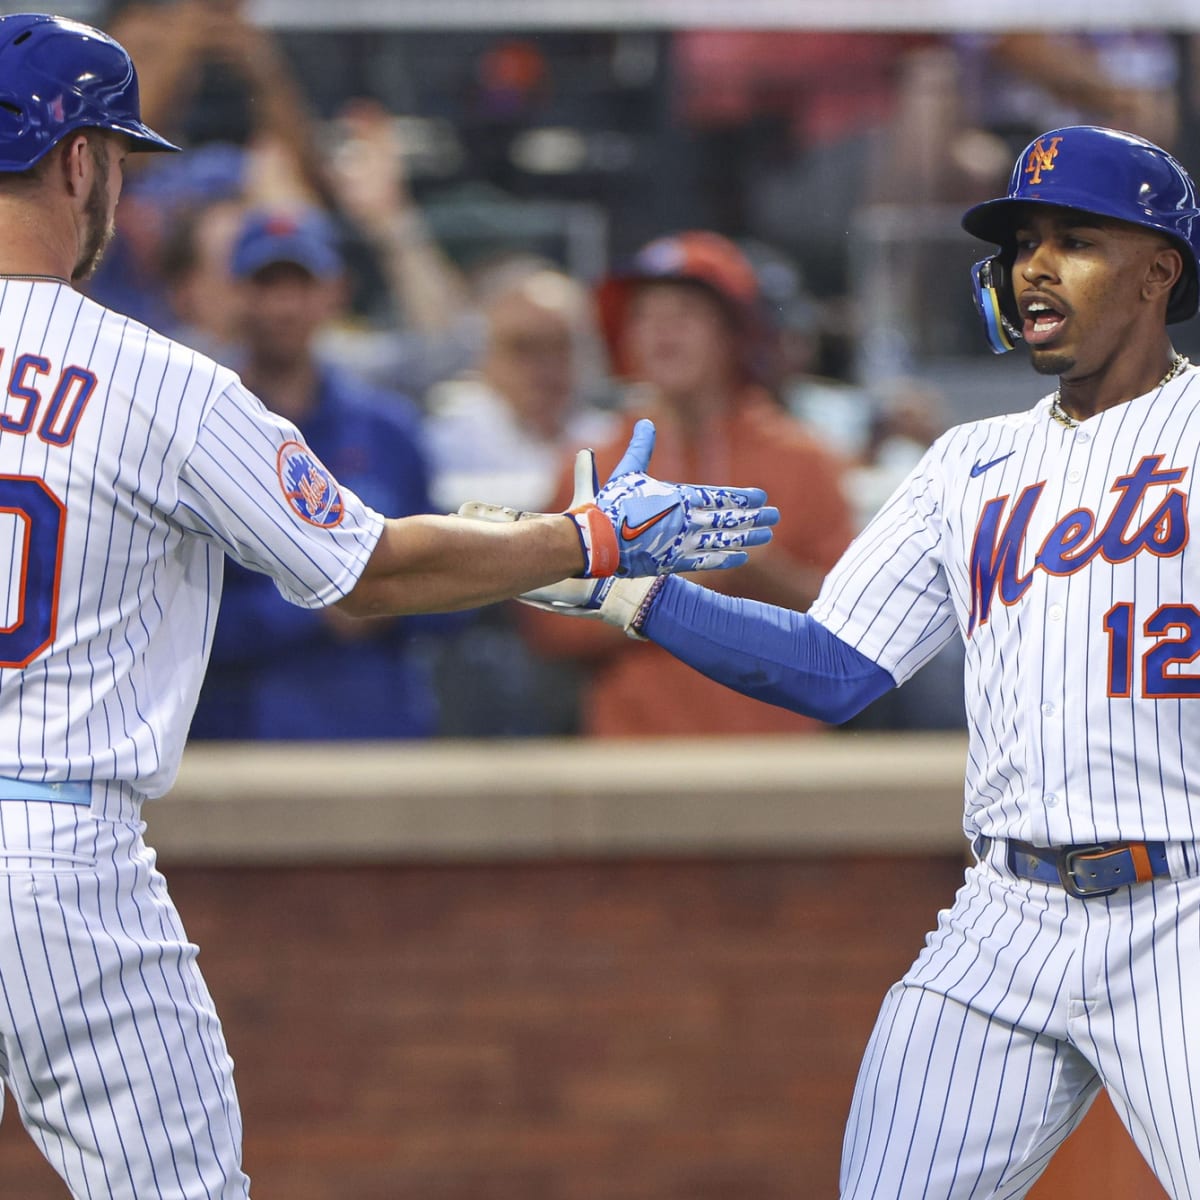 FLUSHING, NY - JULY 19: New York Mets Shortstop Francisco Lindor